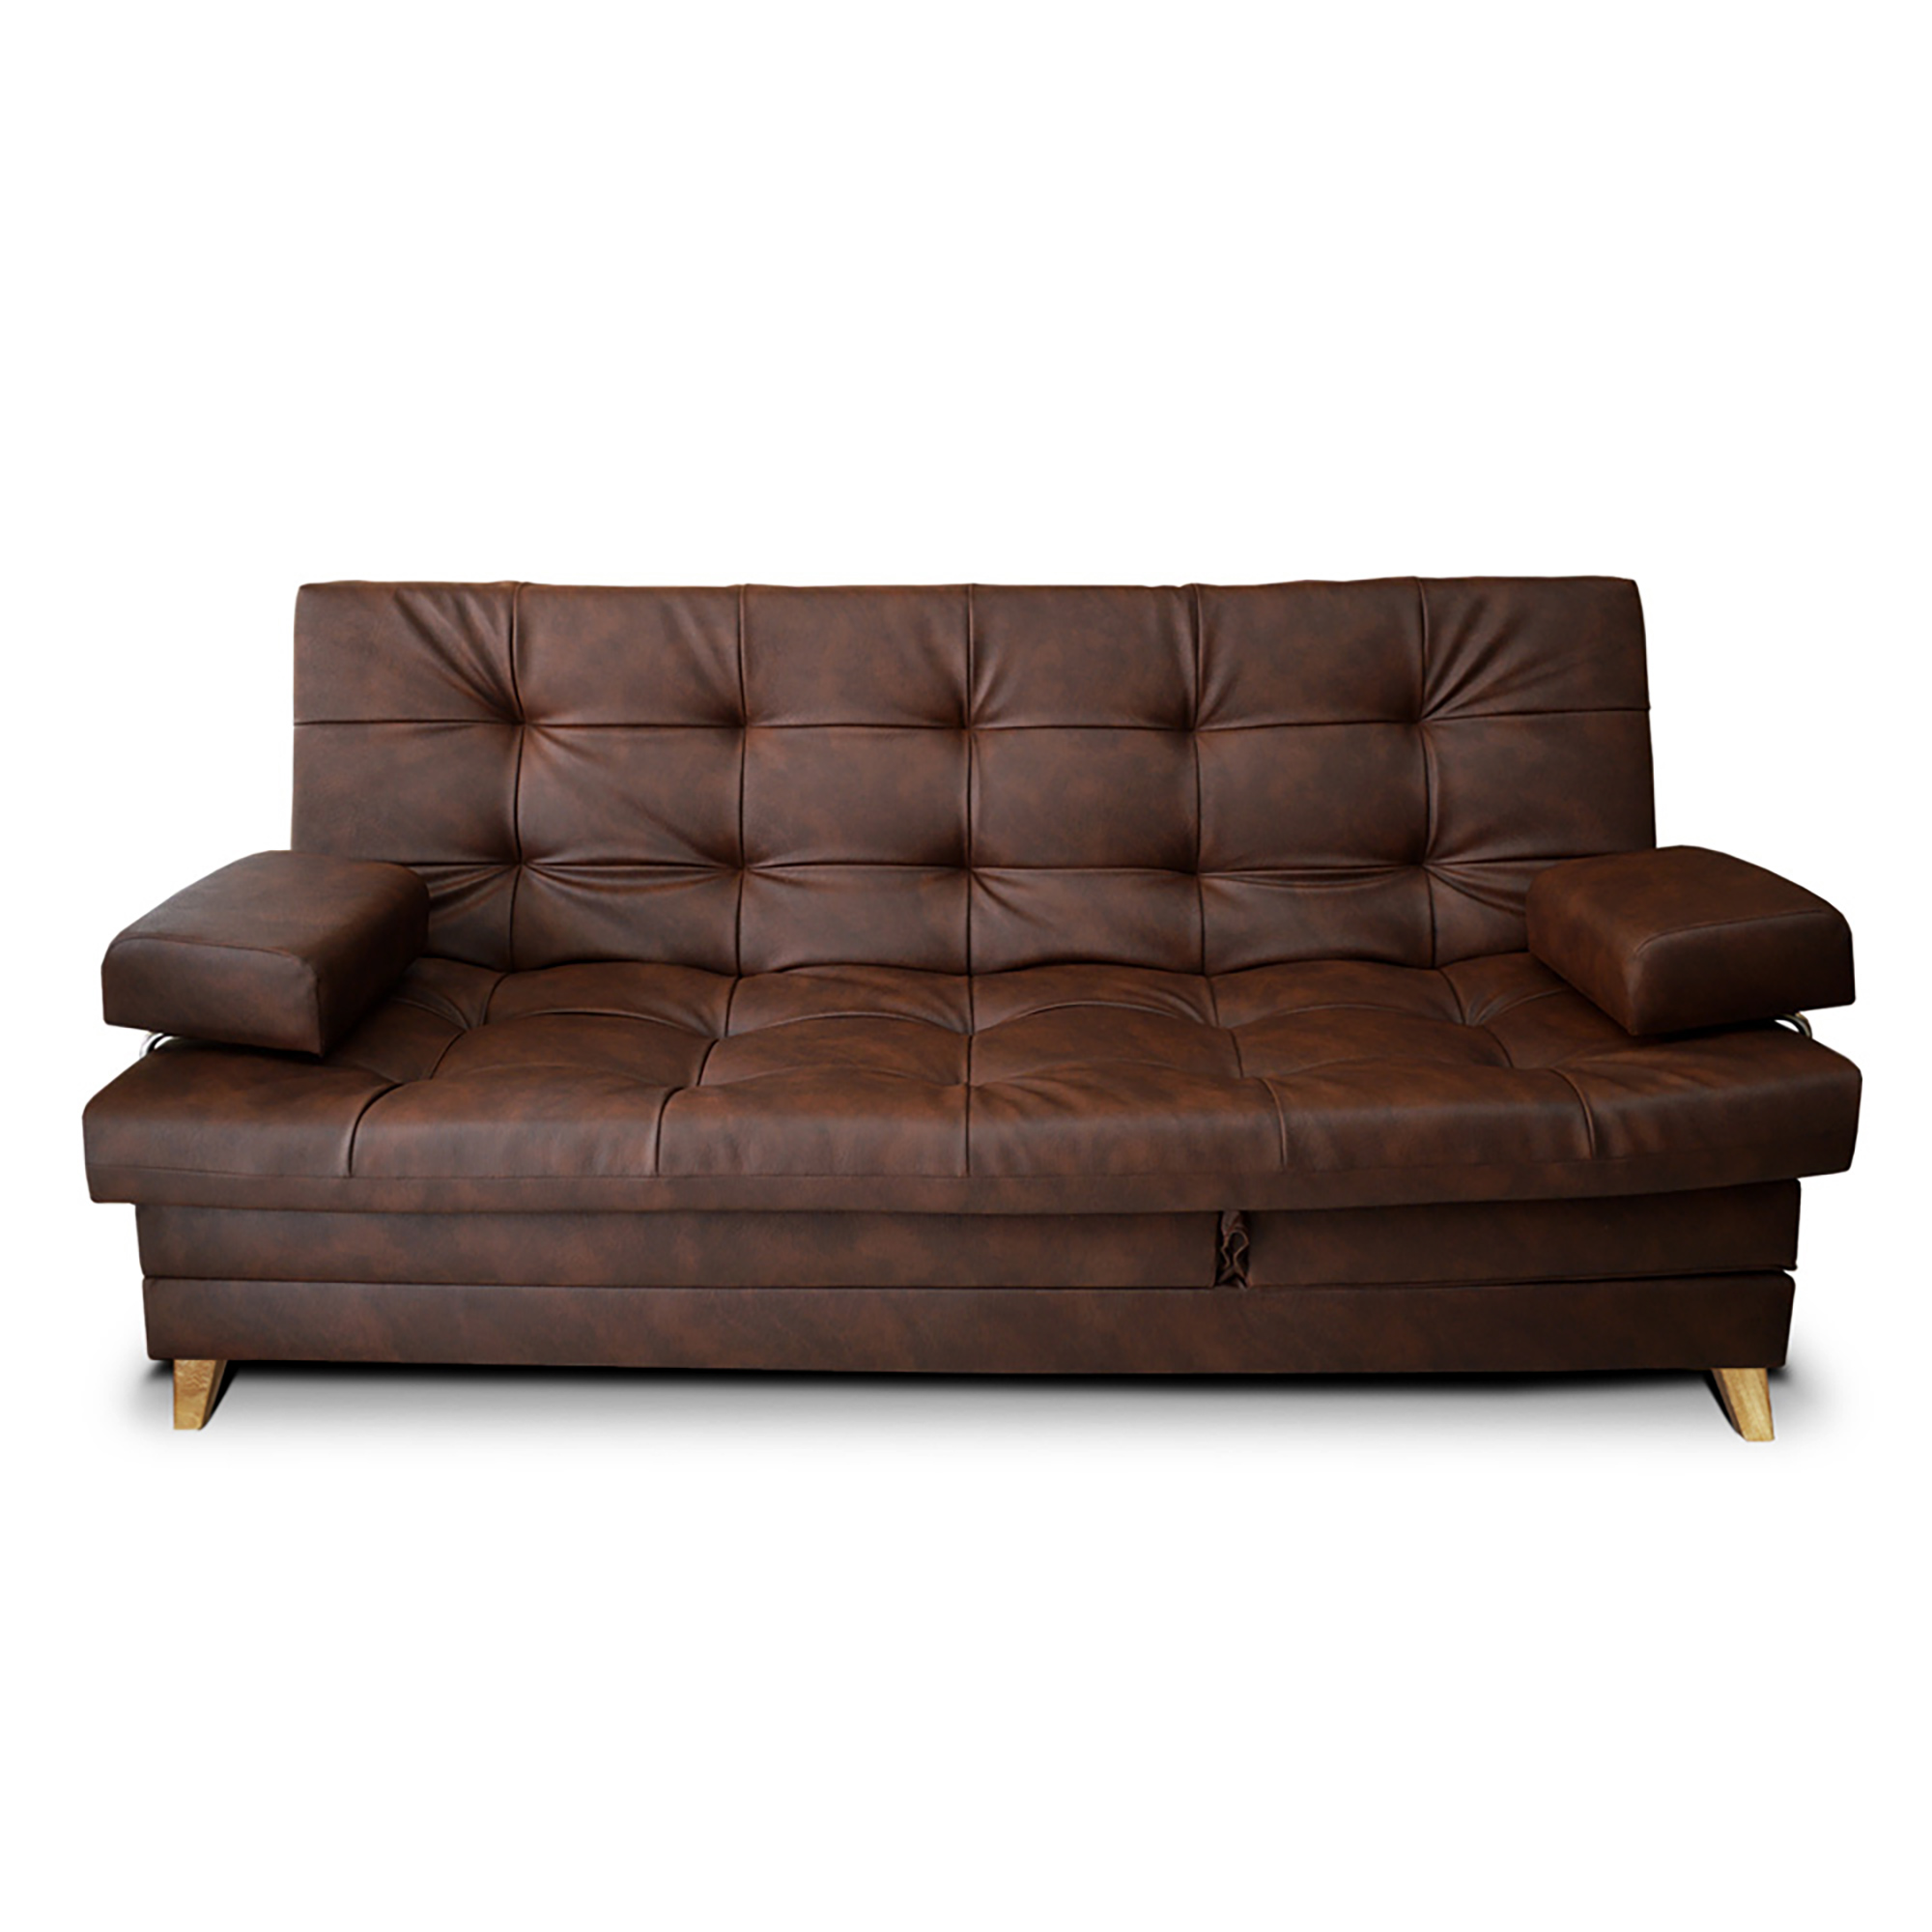 Sofa Cama Suave Color Marron